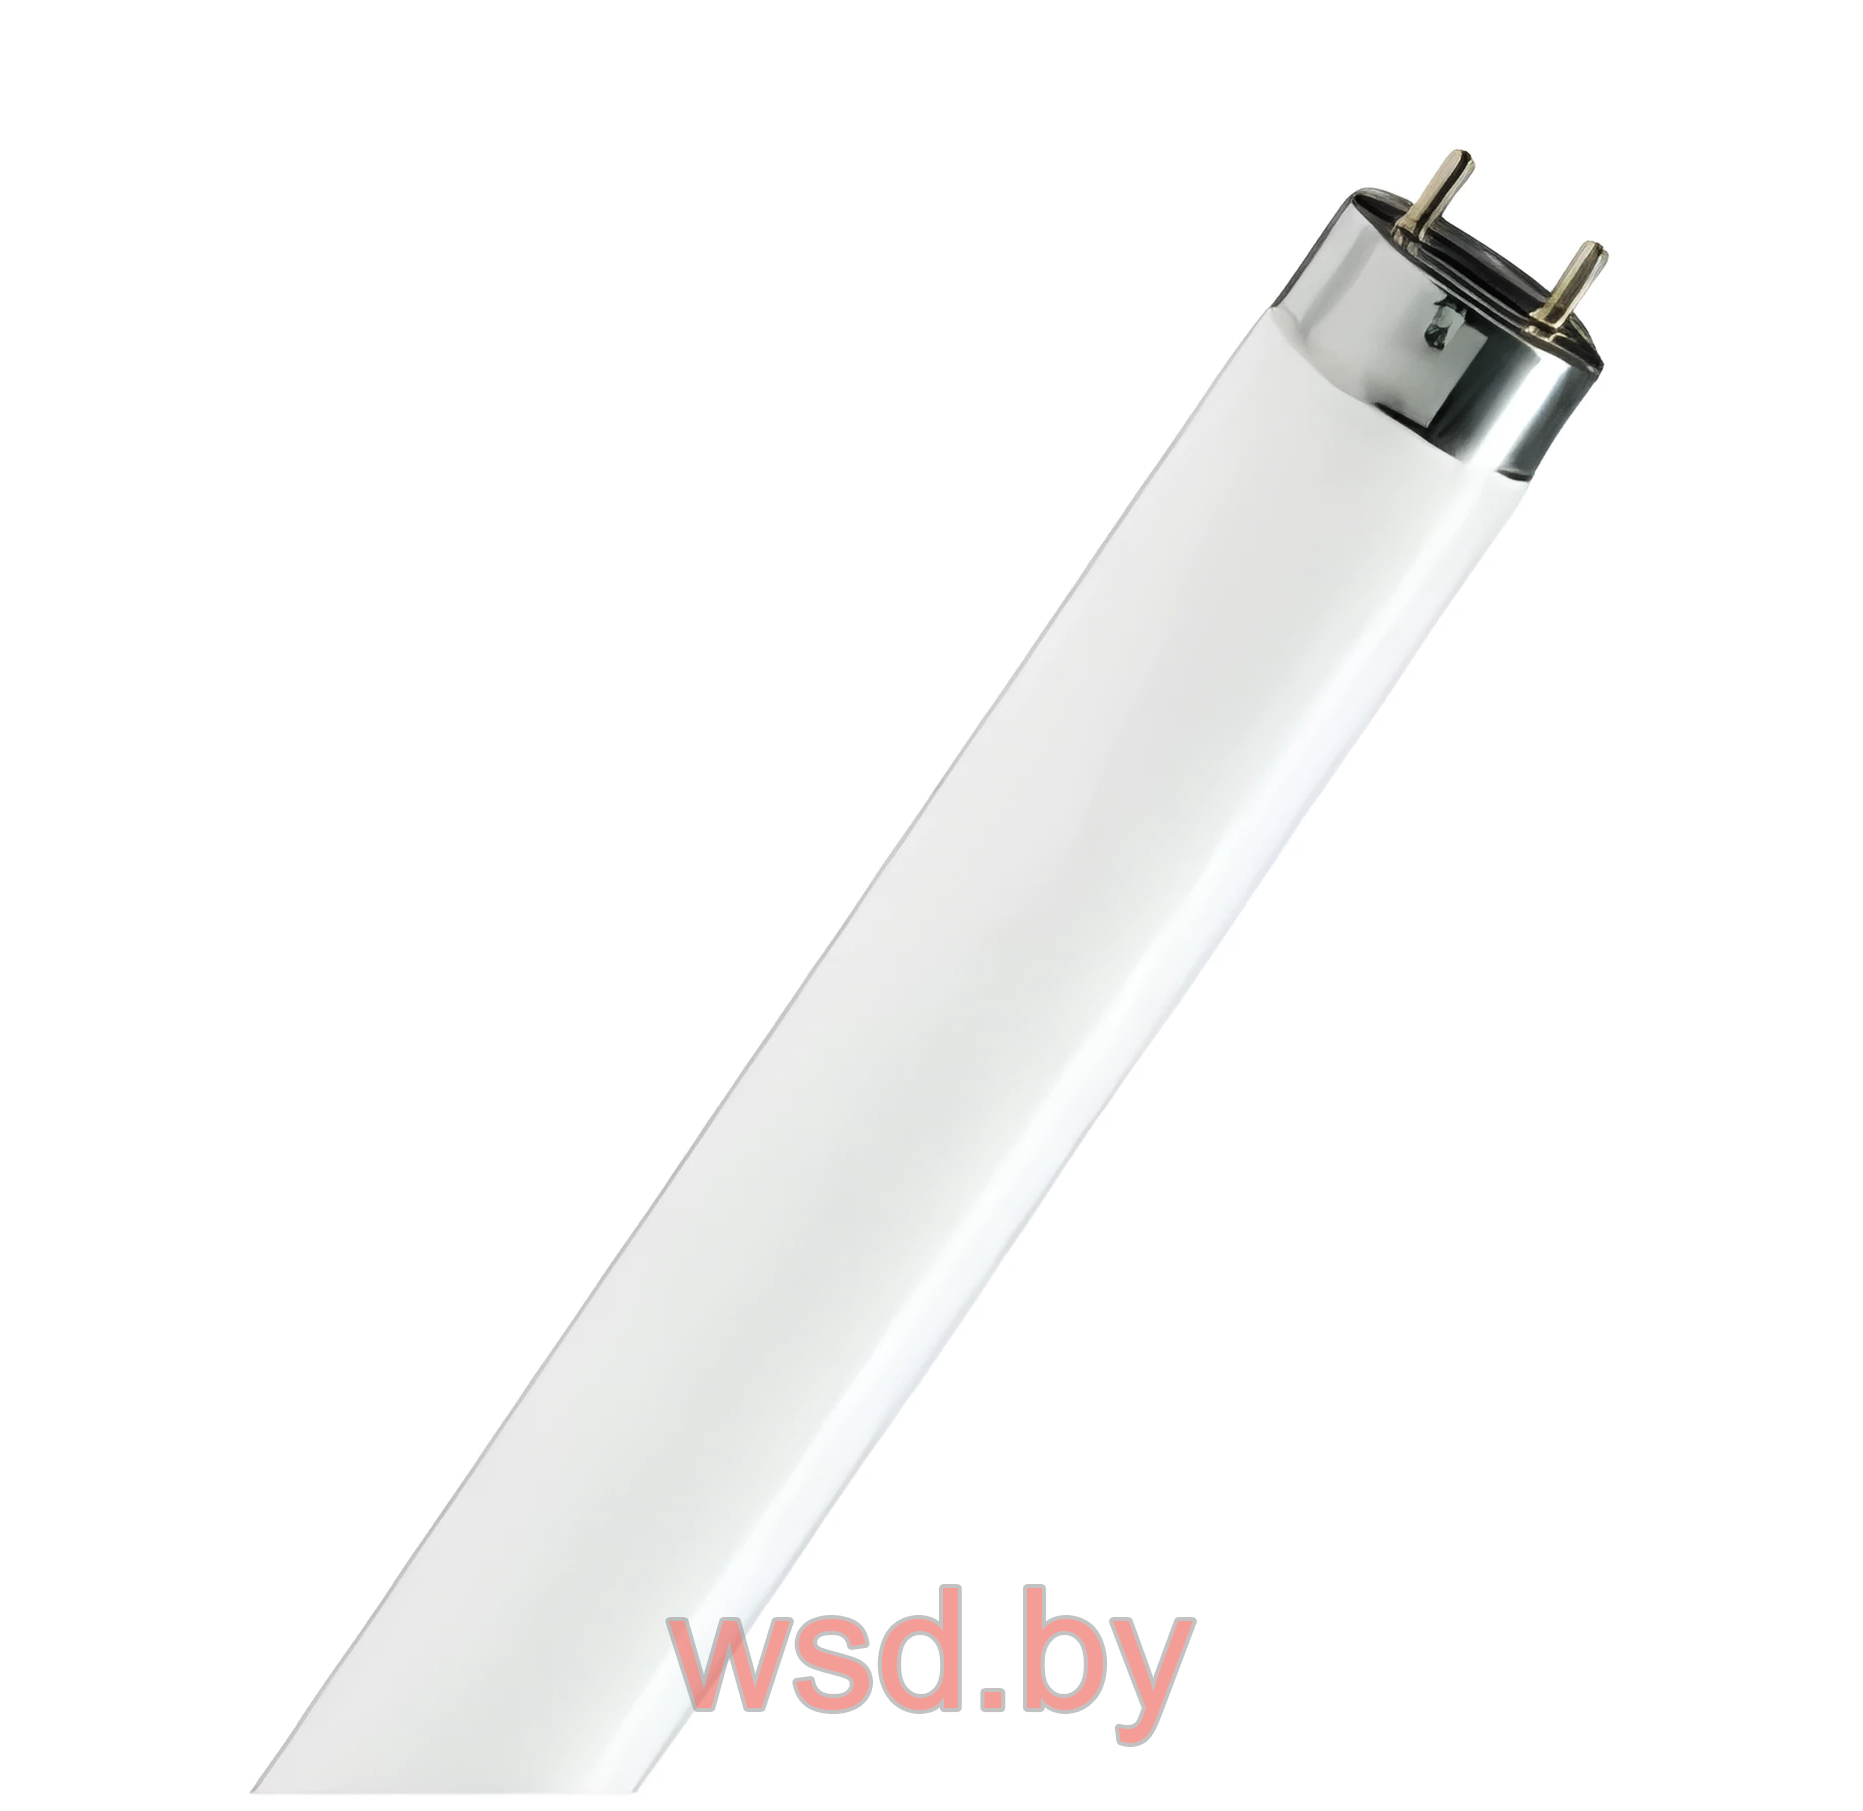 L 30W/840 25X1 OSRAM лампа с улучшенной цветопередачей: 80 Rа. T8 LUMILUX